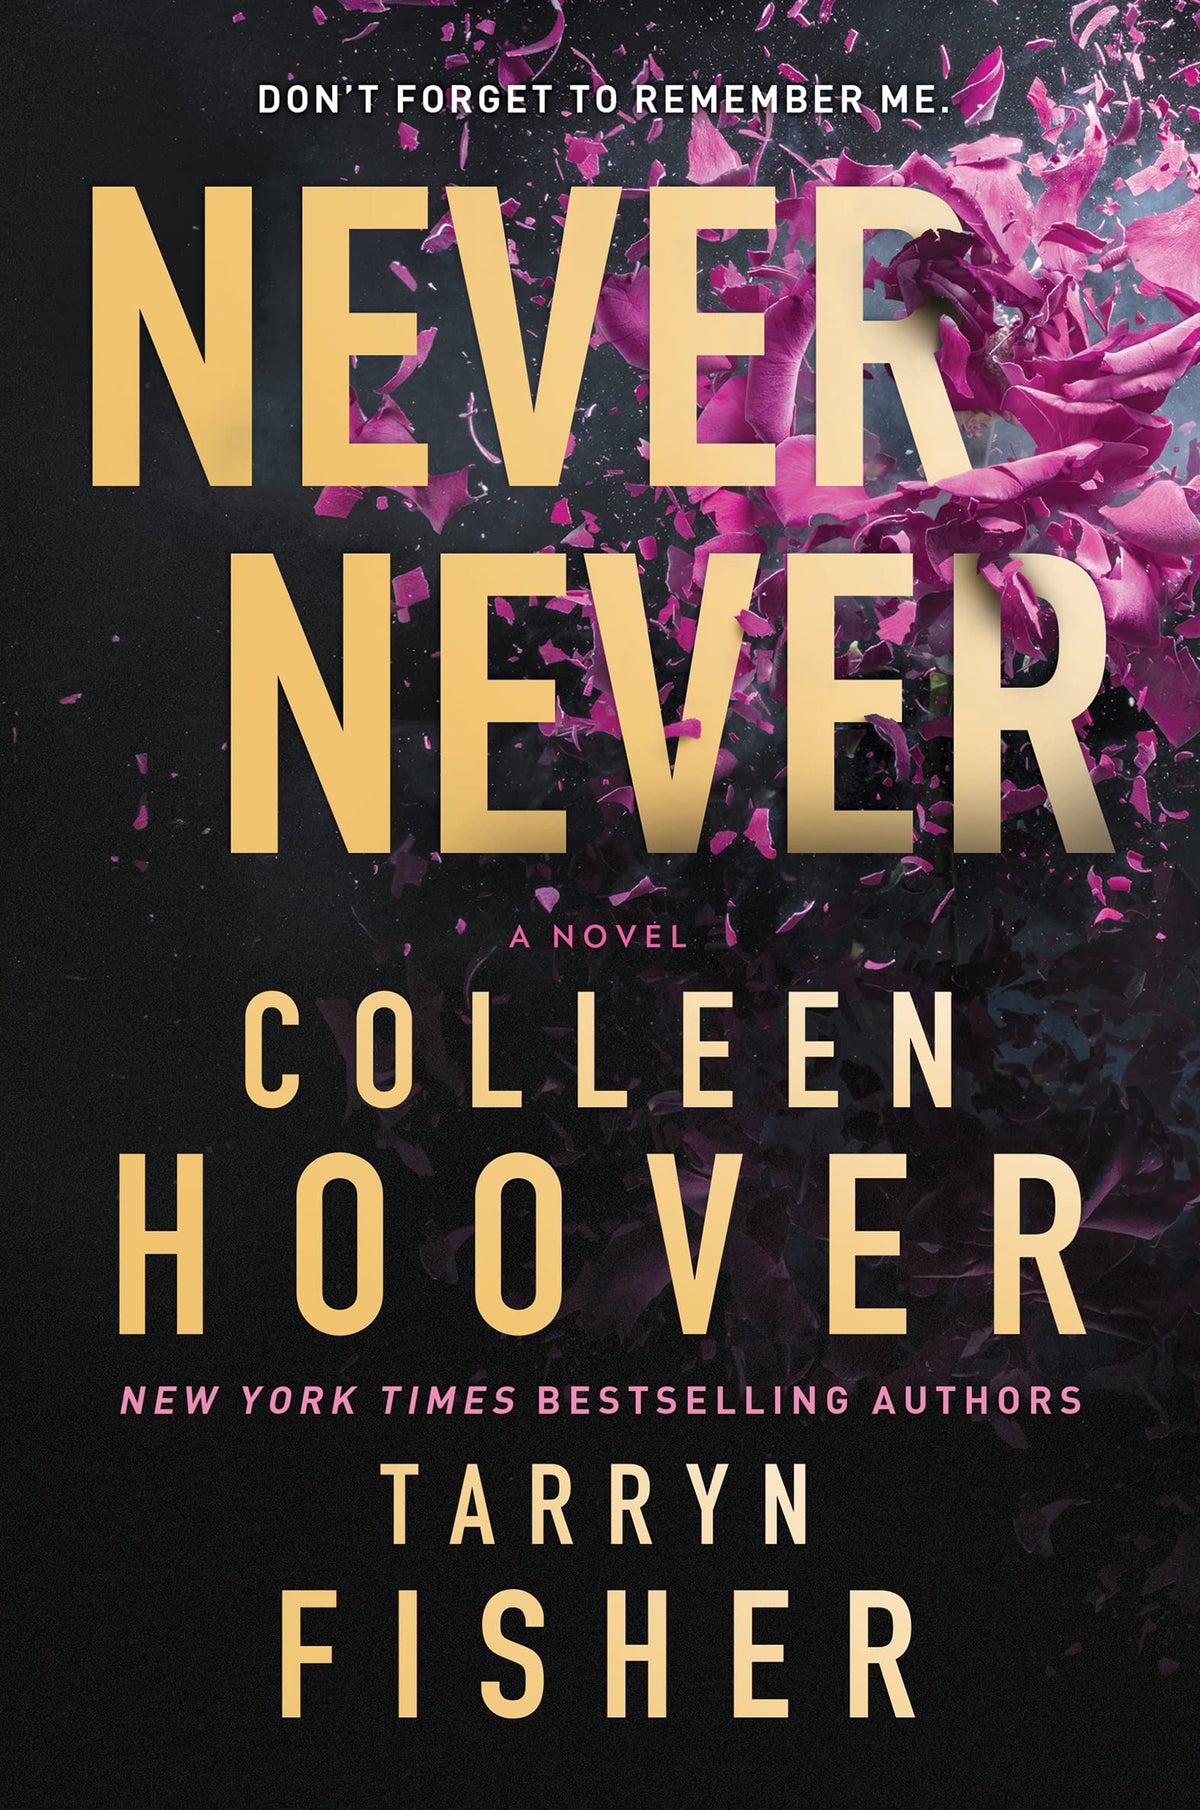 Nunca, nunca (Never, never) - Colleen Hoover, Tarryn Fisher, Iria Rebolo ·  5% de descuento